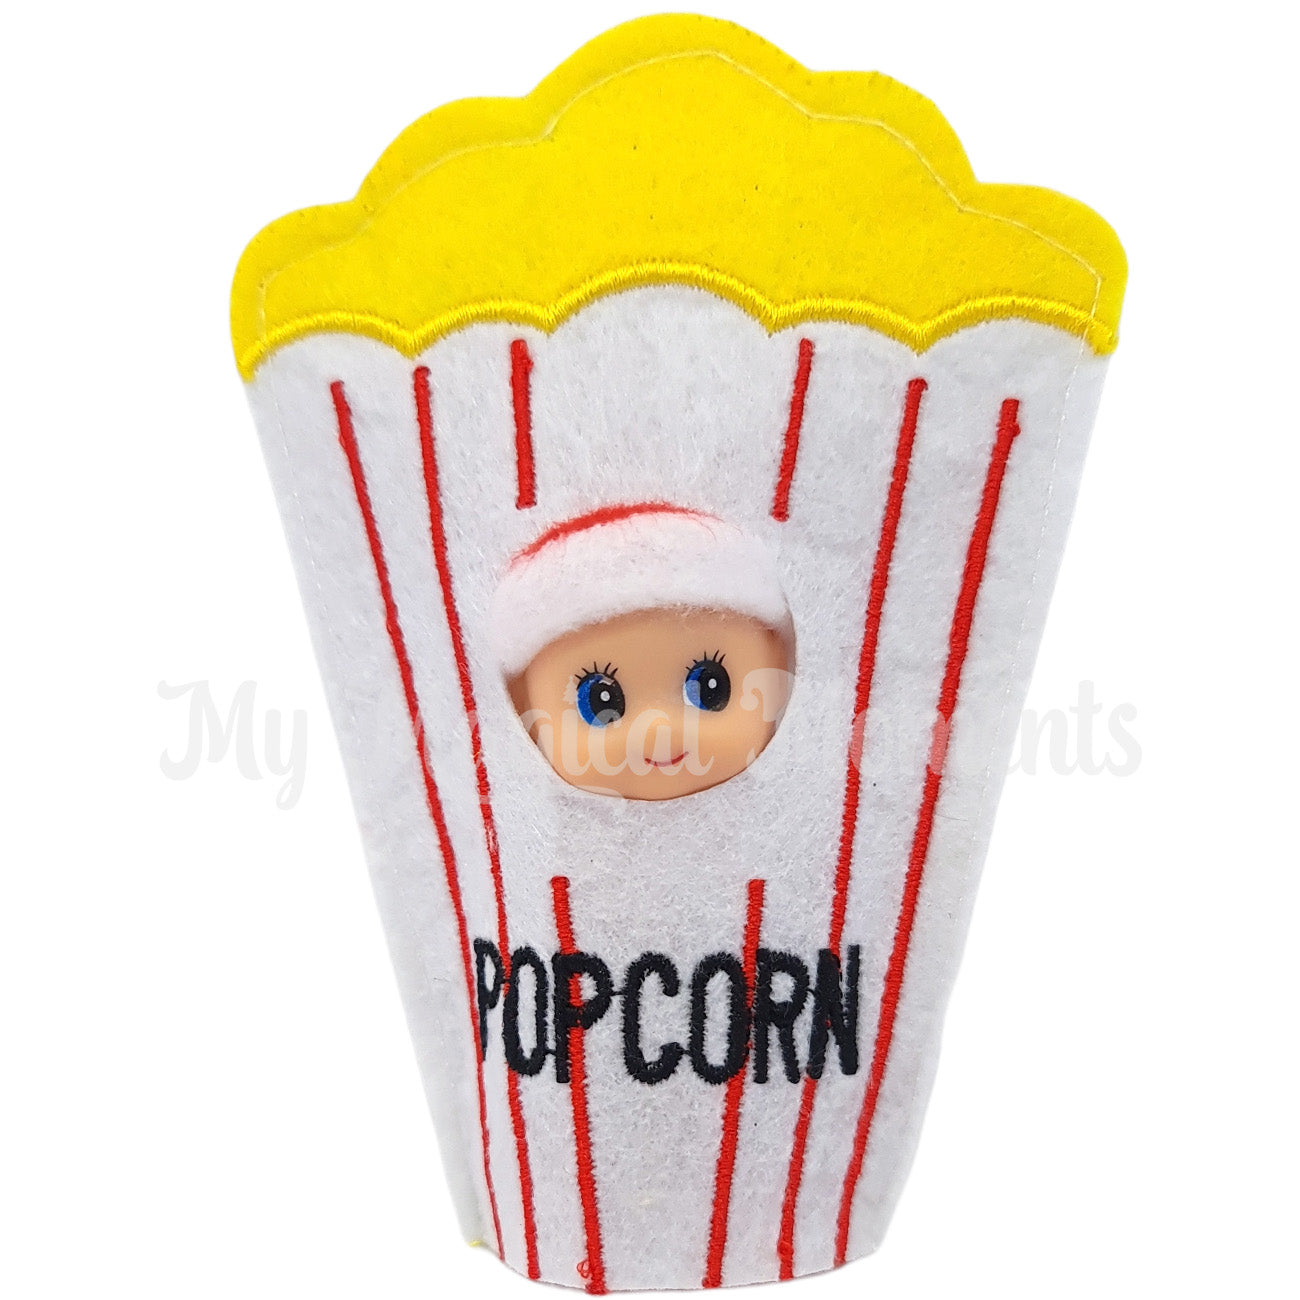 Elf baby in a popcorn suit